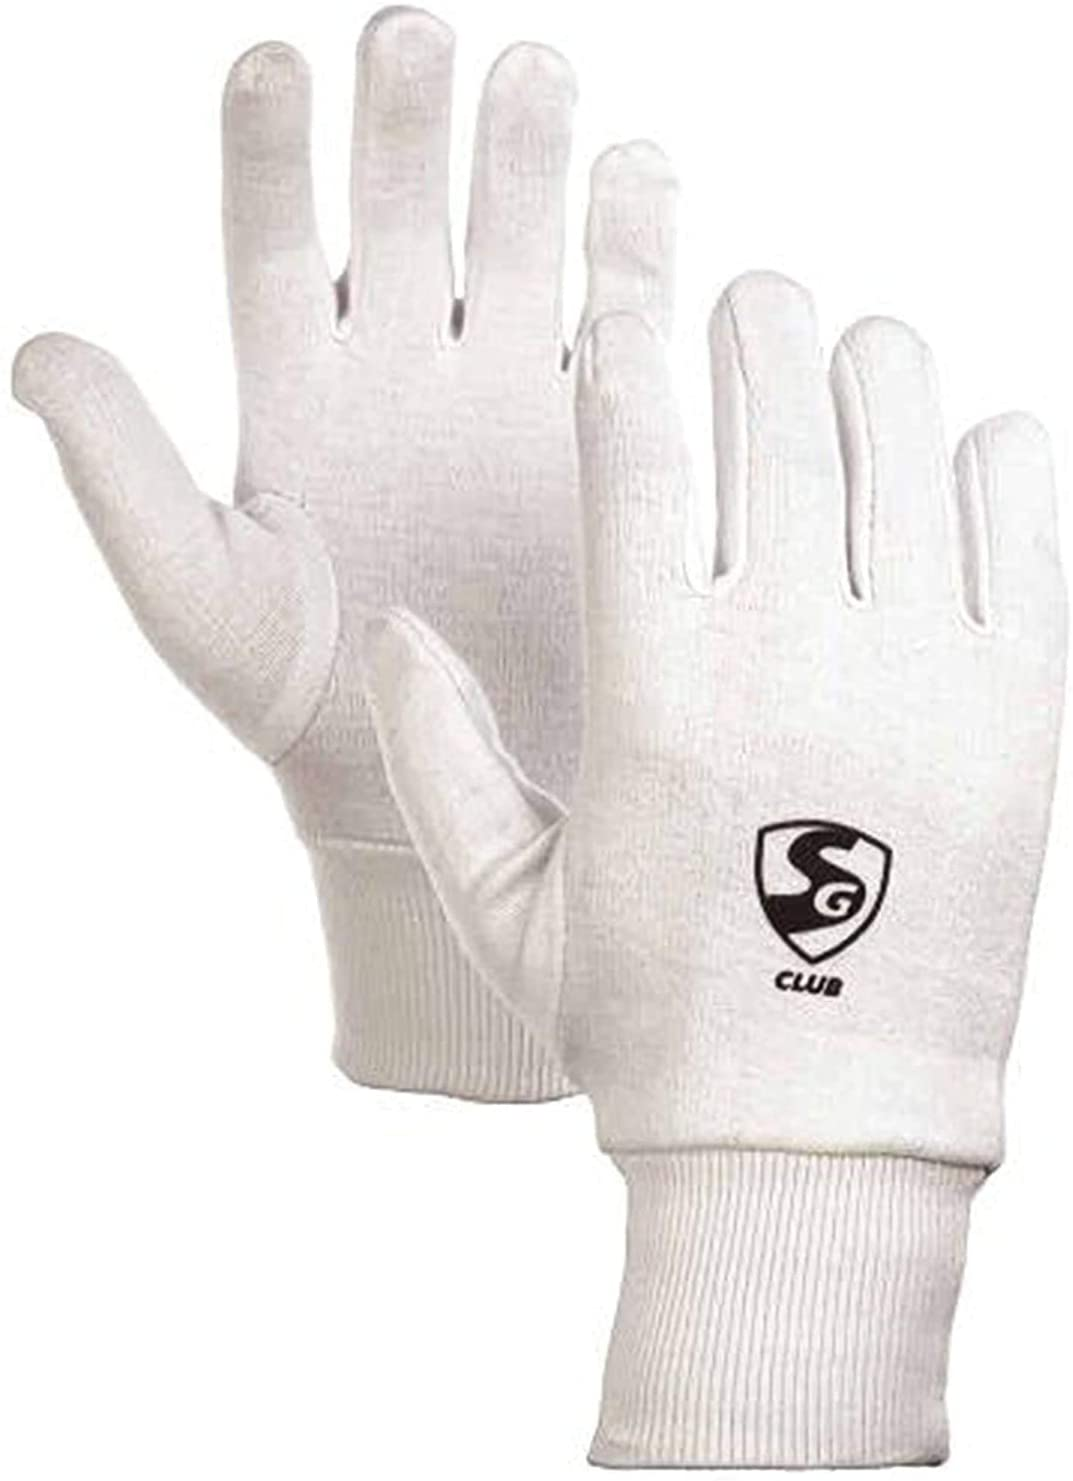 SG Club Adult Cricket Inner Gloves